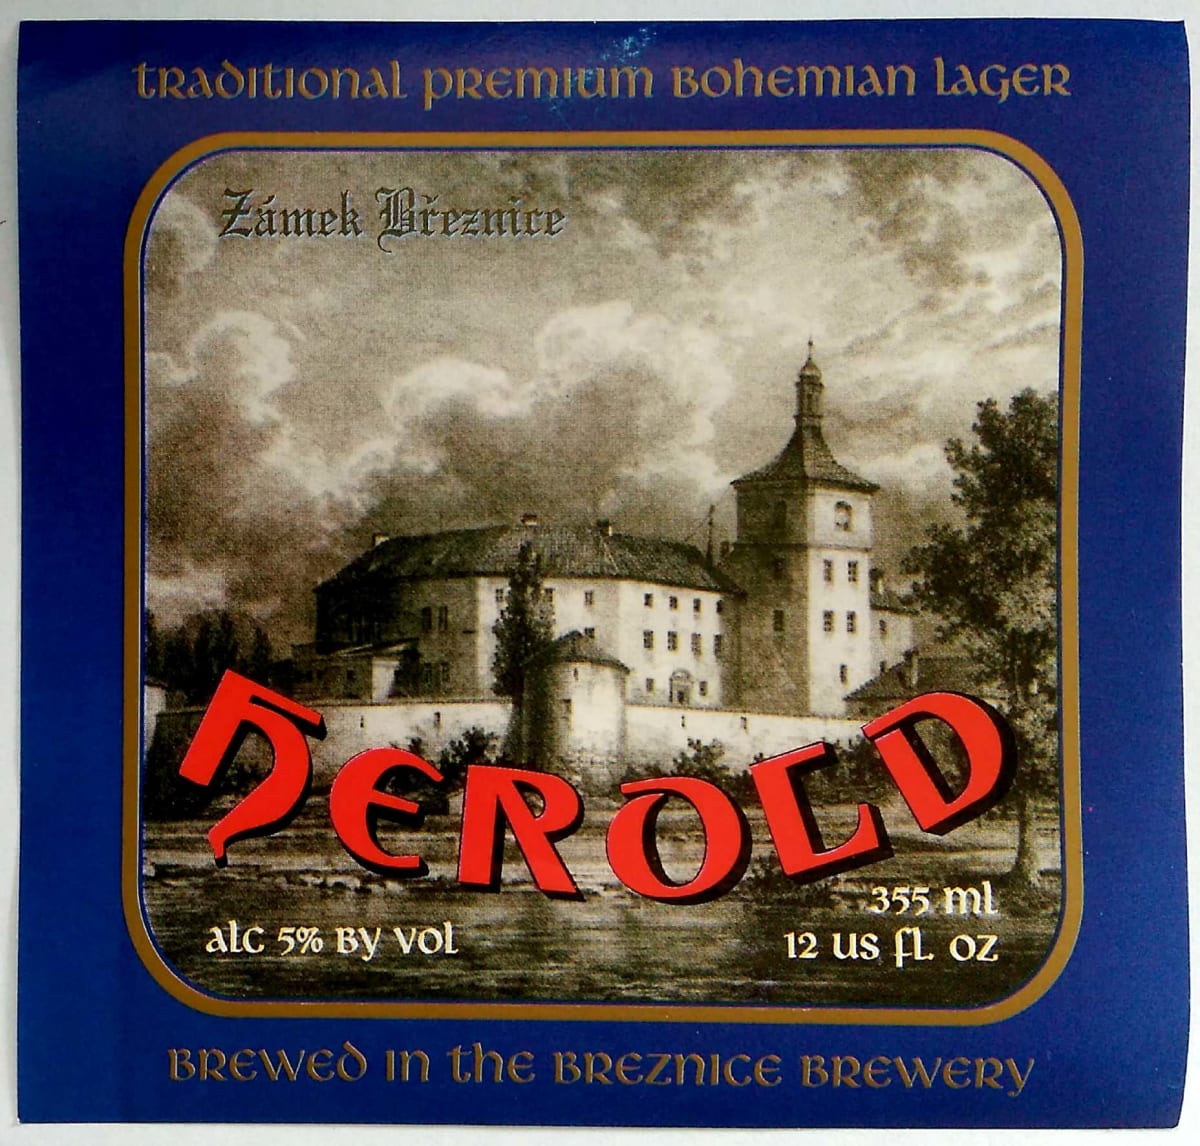 Herold traditional premium bohemian lager Etk. A